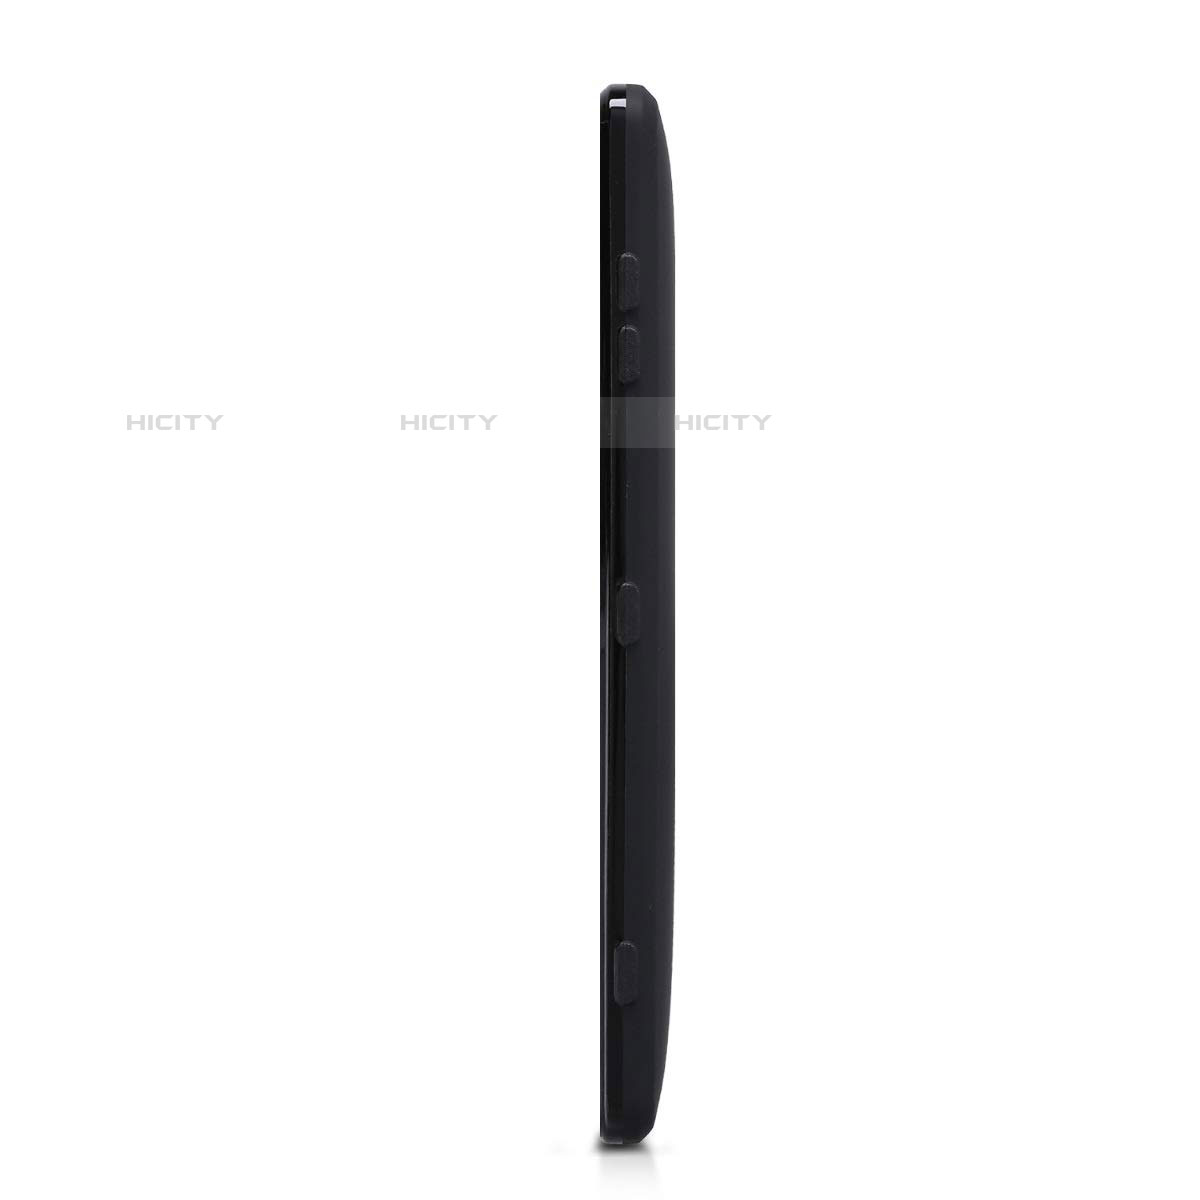 Silikon Hülle Handyhülle Ultra Dünn Schutzhülle für Sony Xperia XZ2 Premium Schwarz